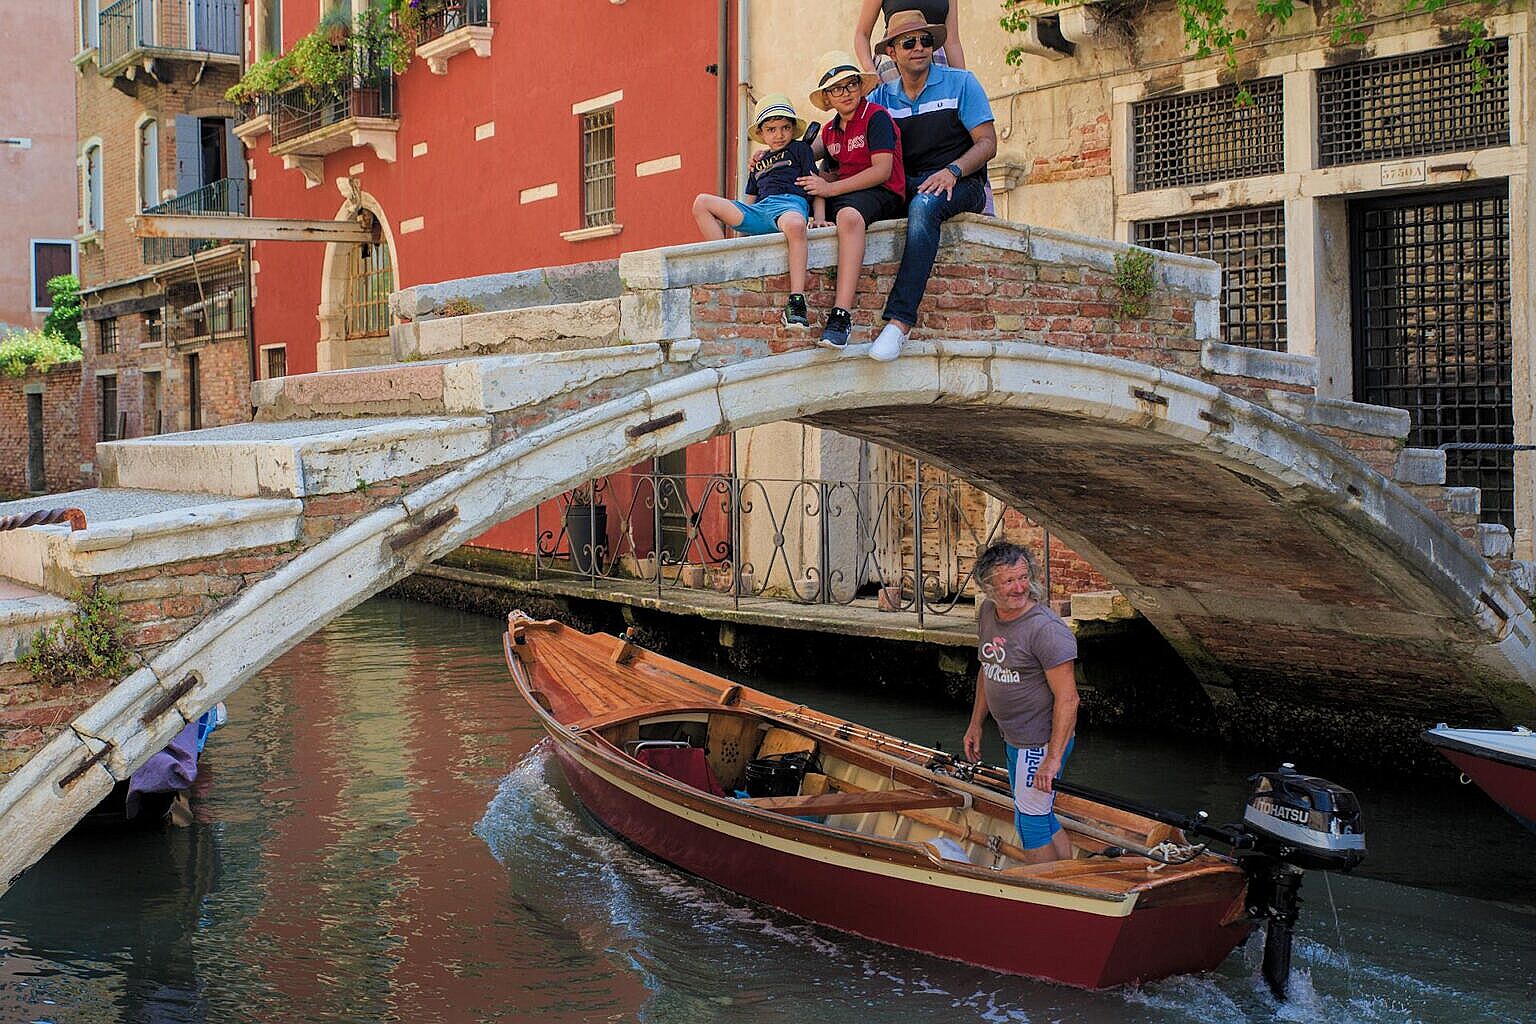 A traditional Sanpierota passing under a bridge in Venice